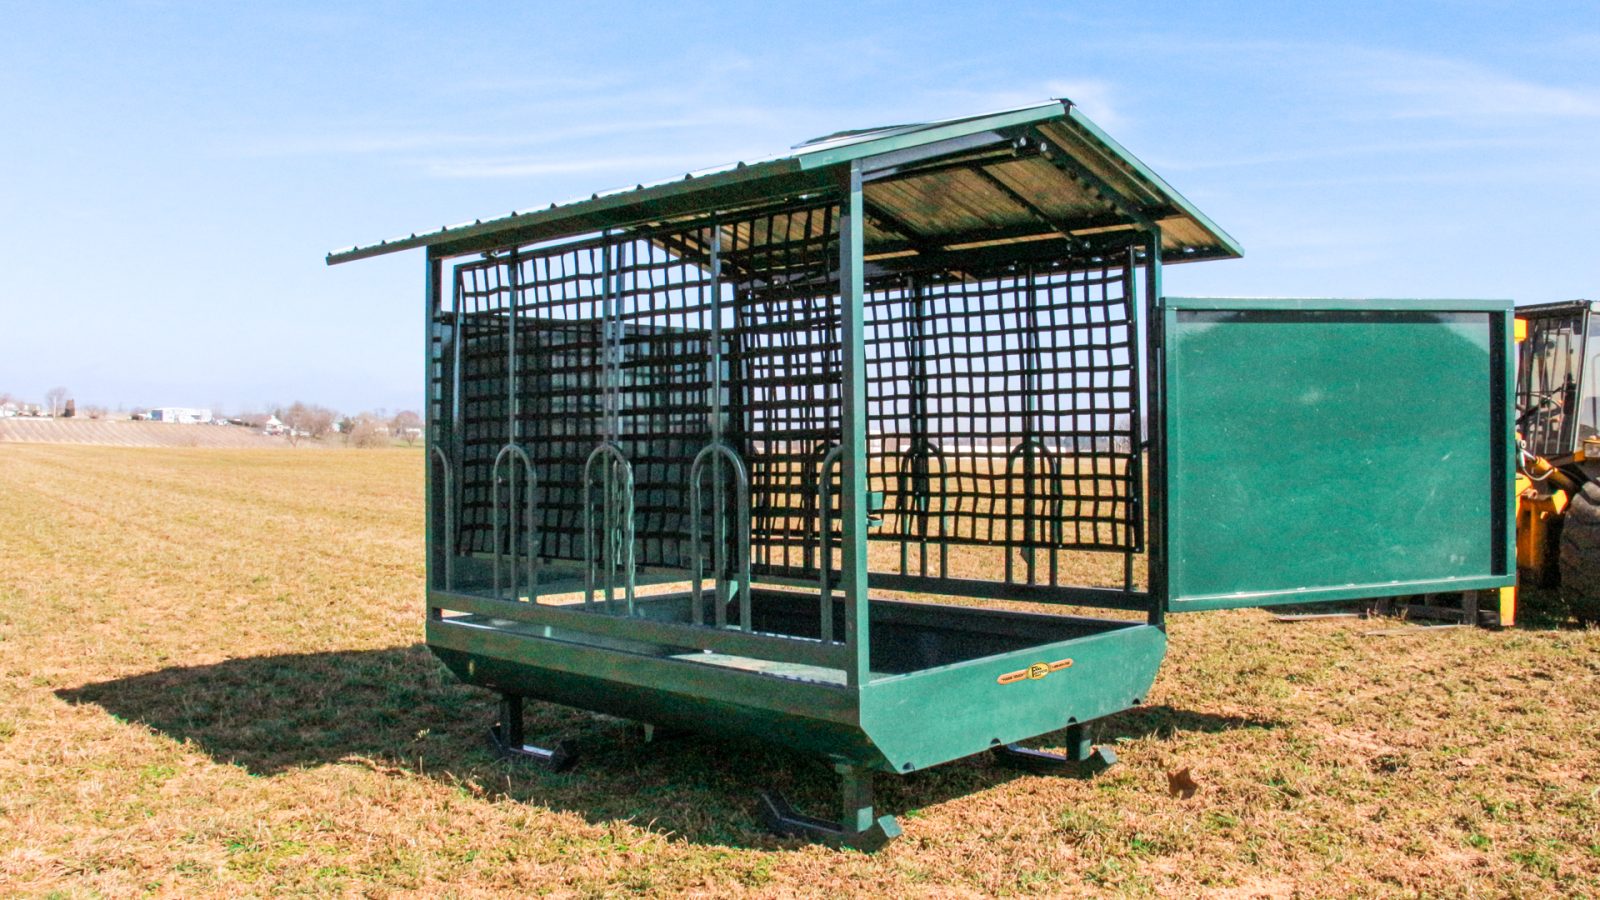 exterior of farmco slow feeder for horse colic prevention